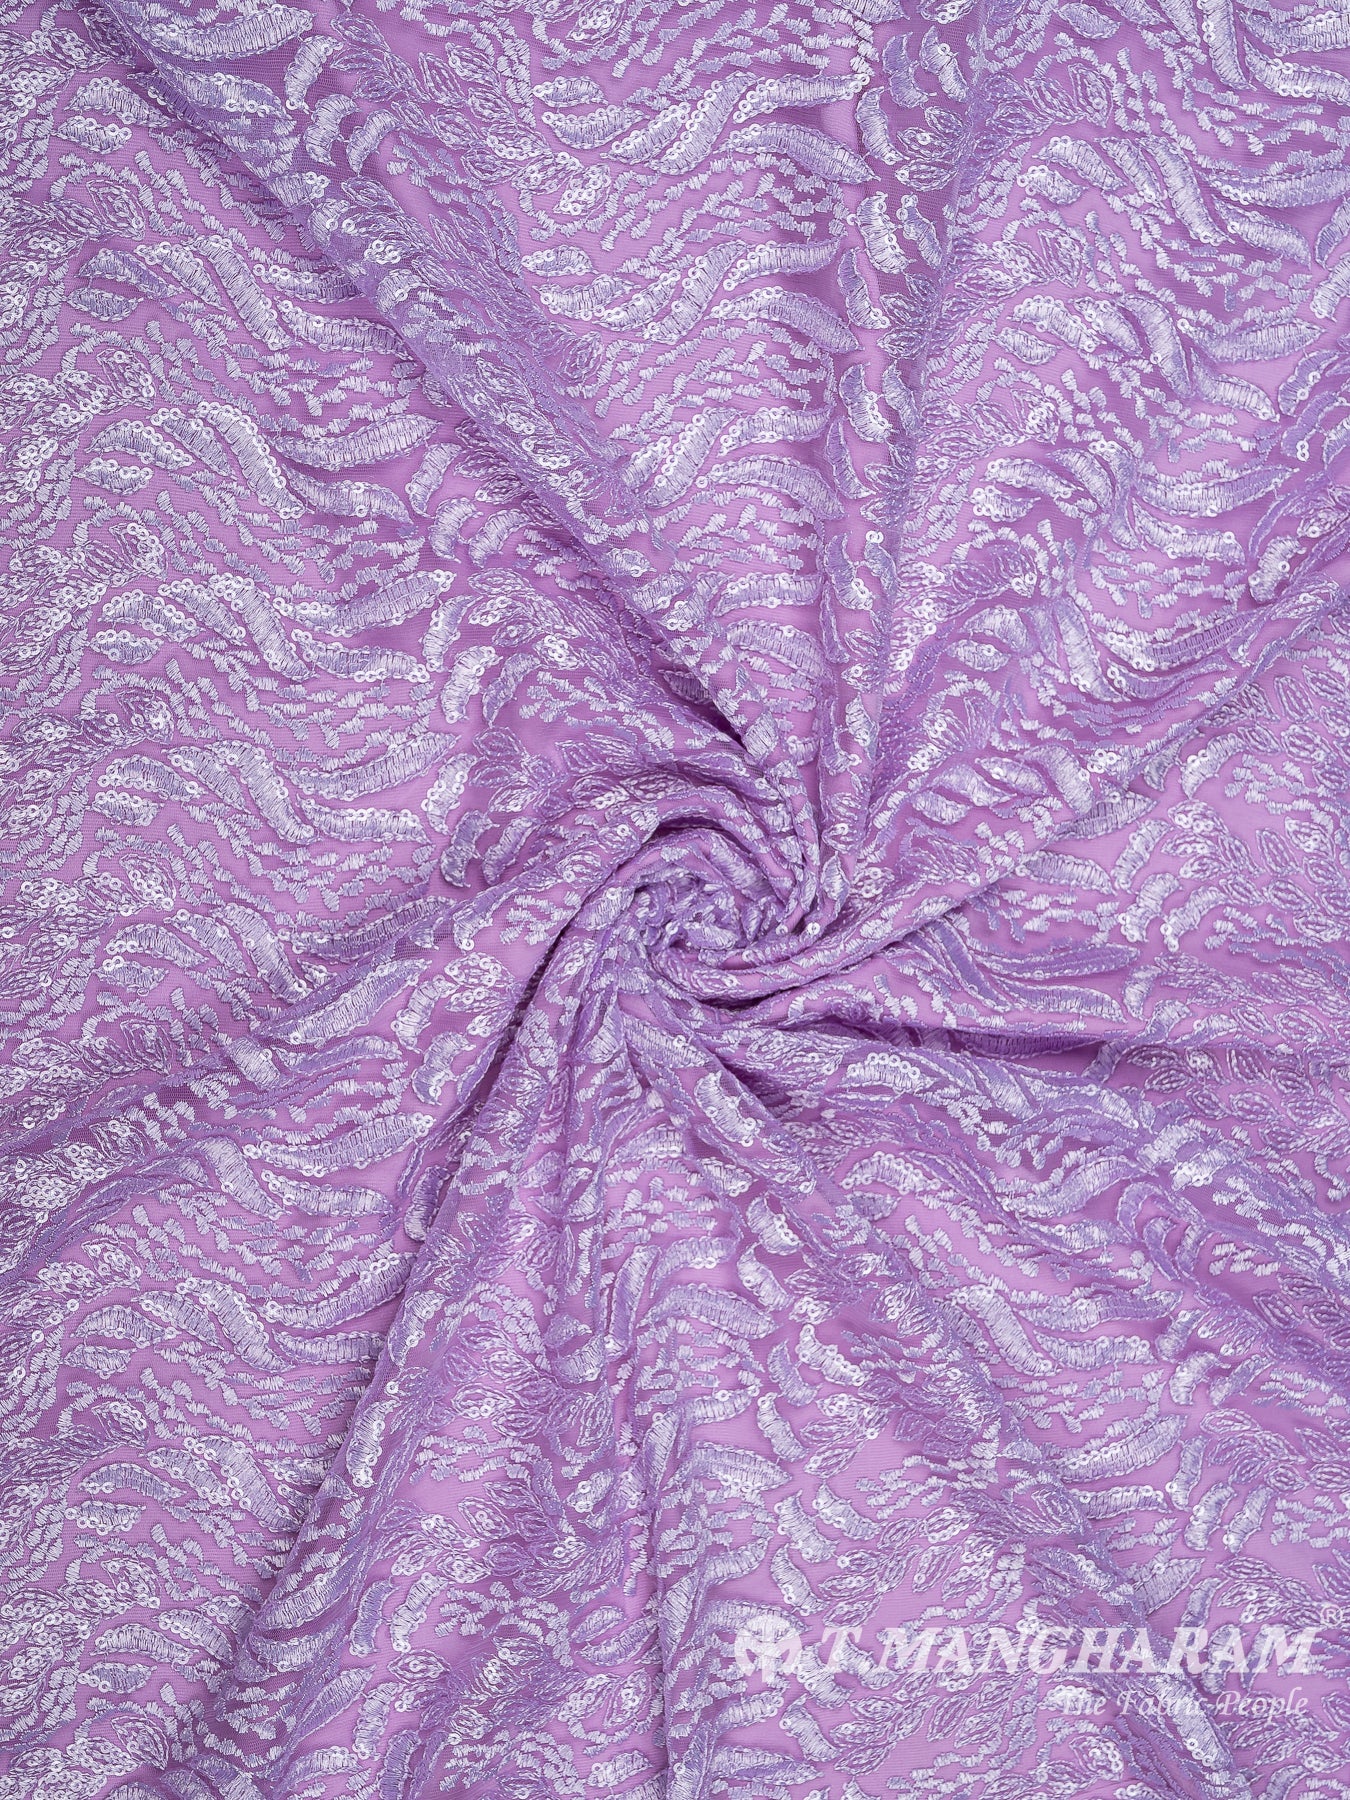 Violet Fancy Net Fabric - EB5804 view-1